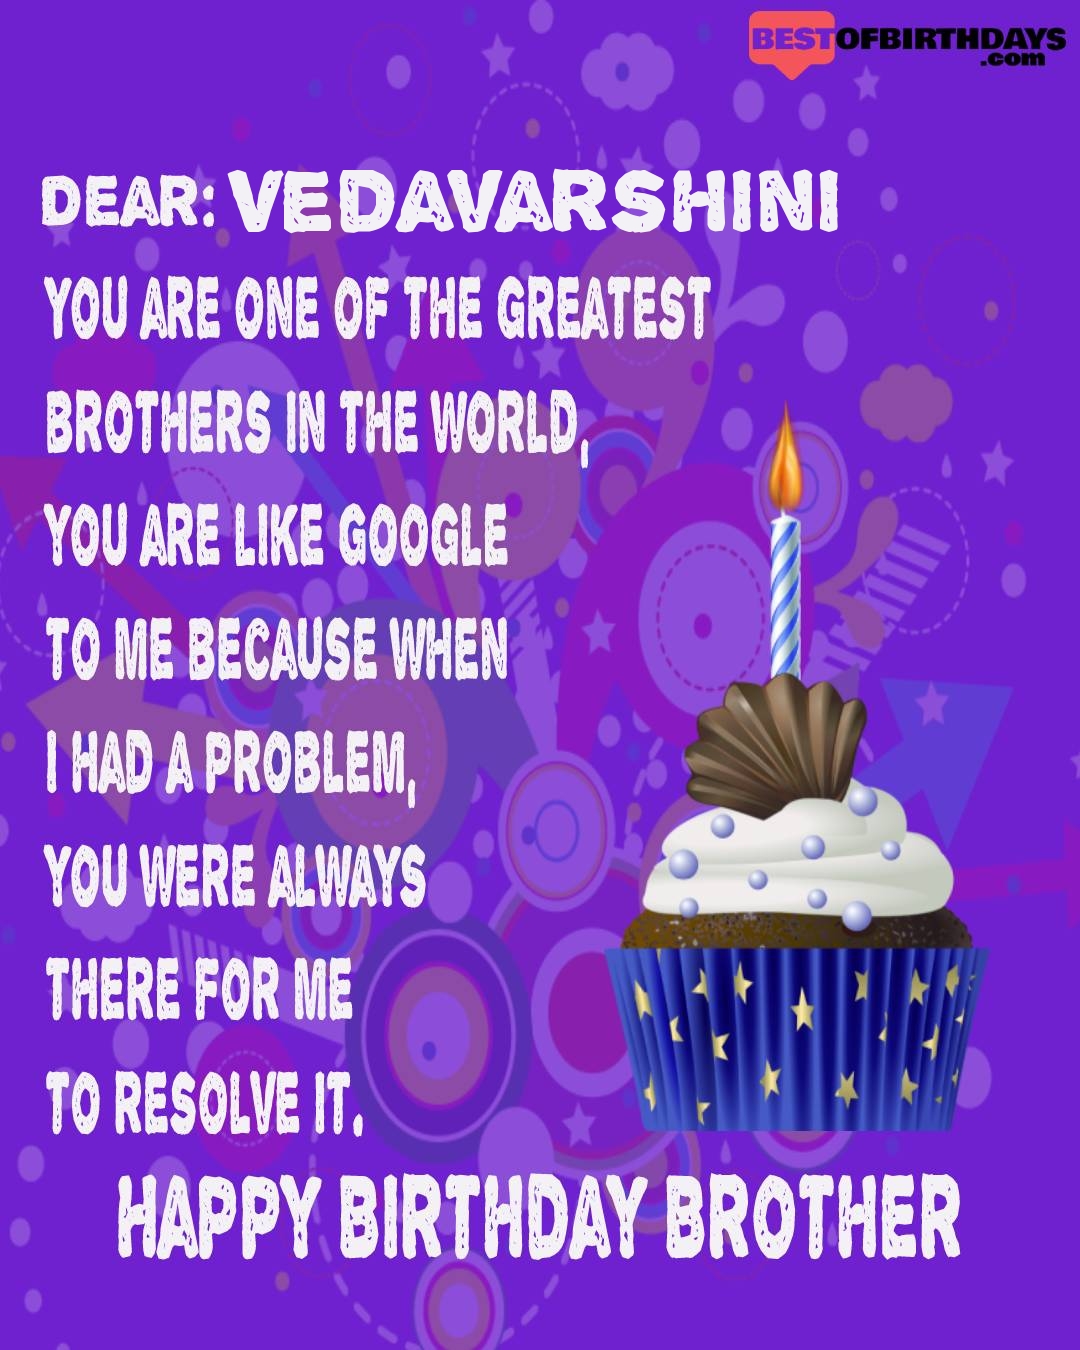 Happy birthday vedavarshini bhai brother bro